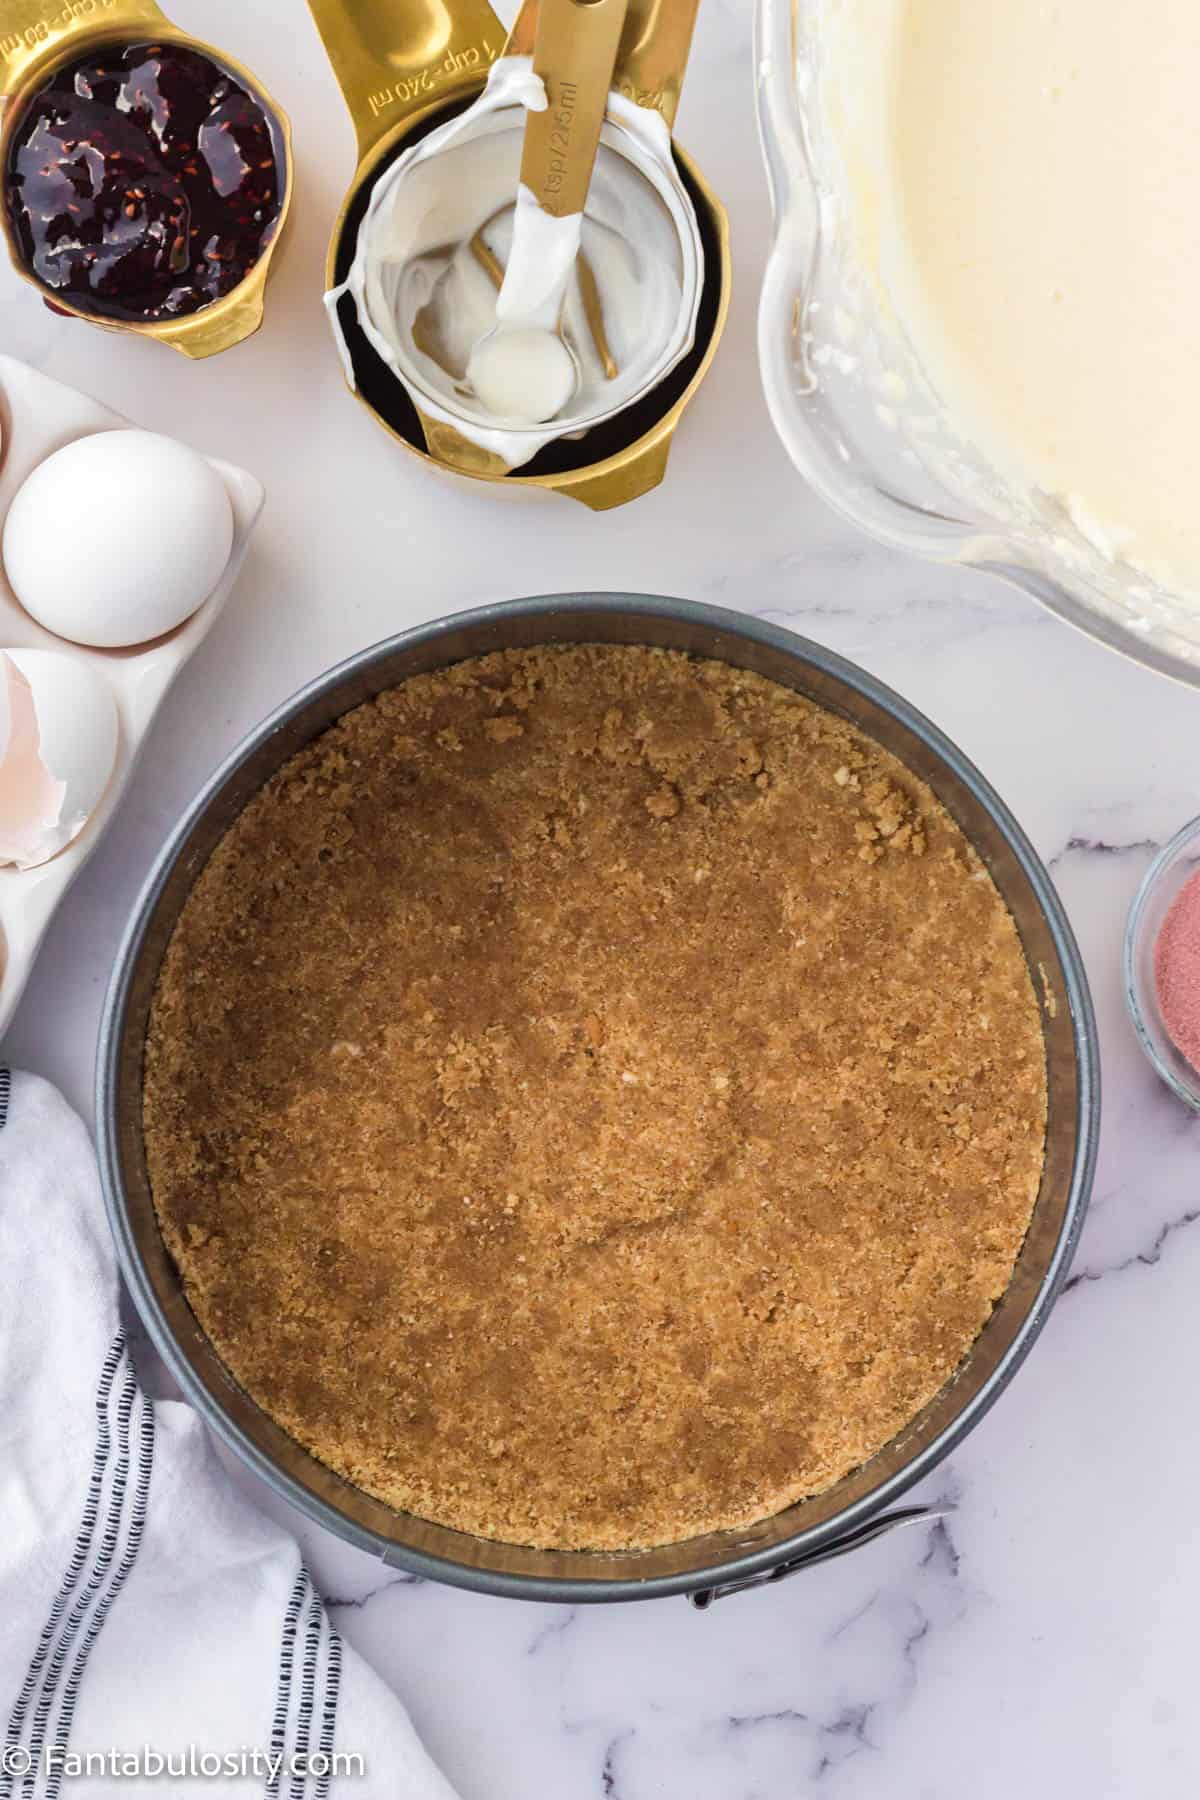 Press sandy crust mixture into the bottom of the springform pan.